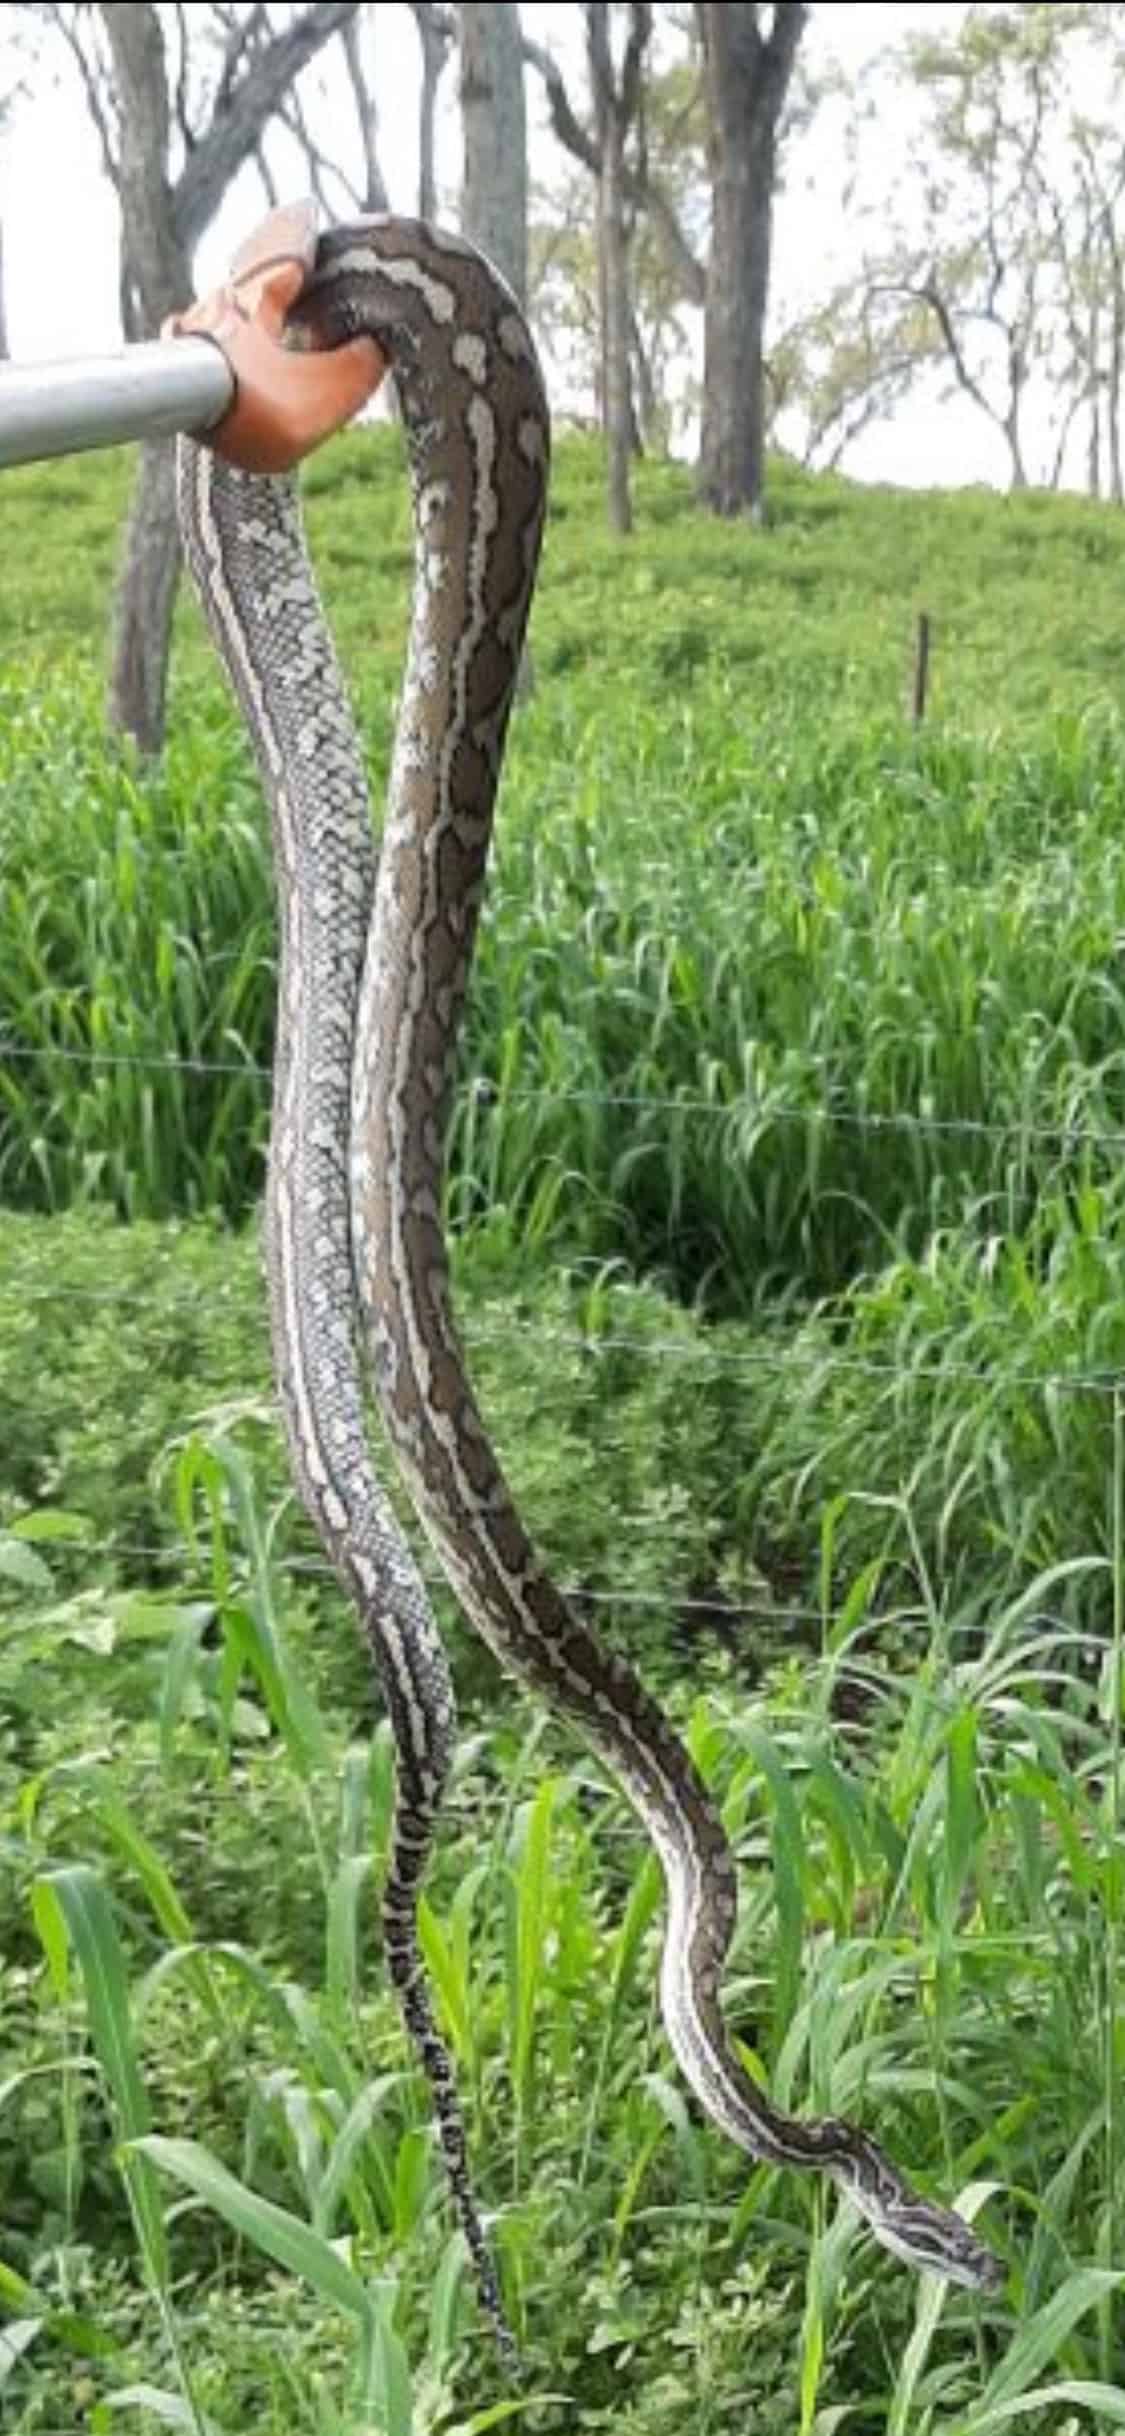 Snake caught in yard